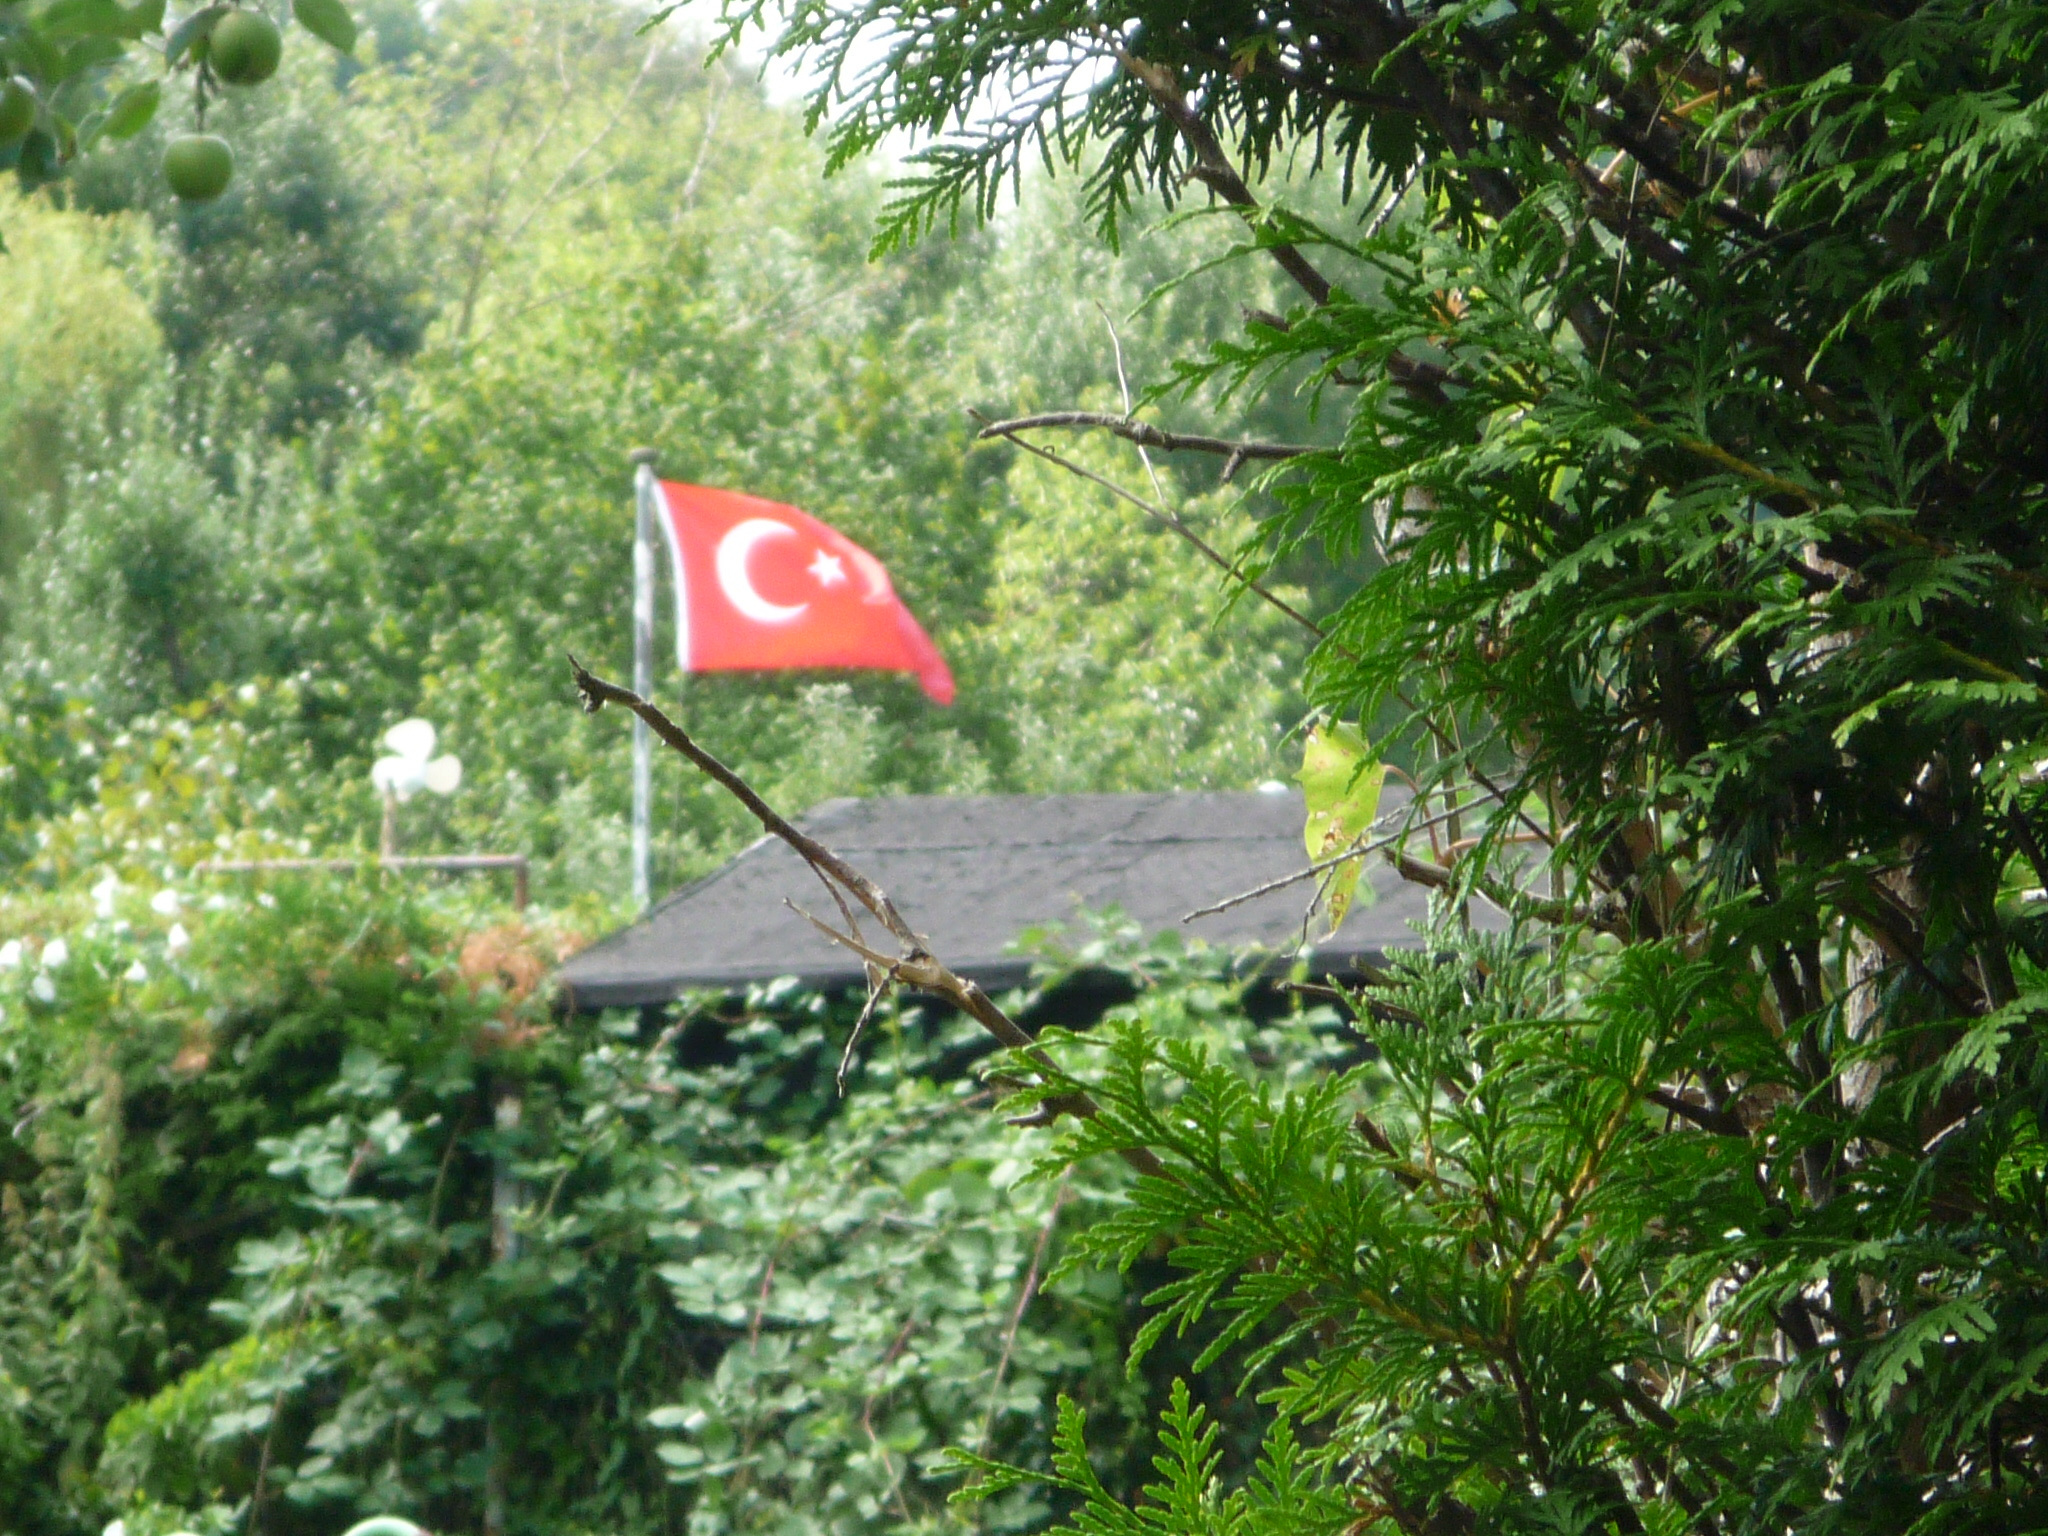 türkischer Kleingarten in Kiel